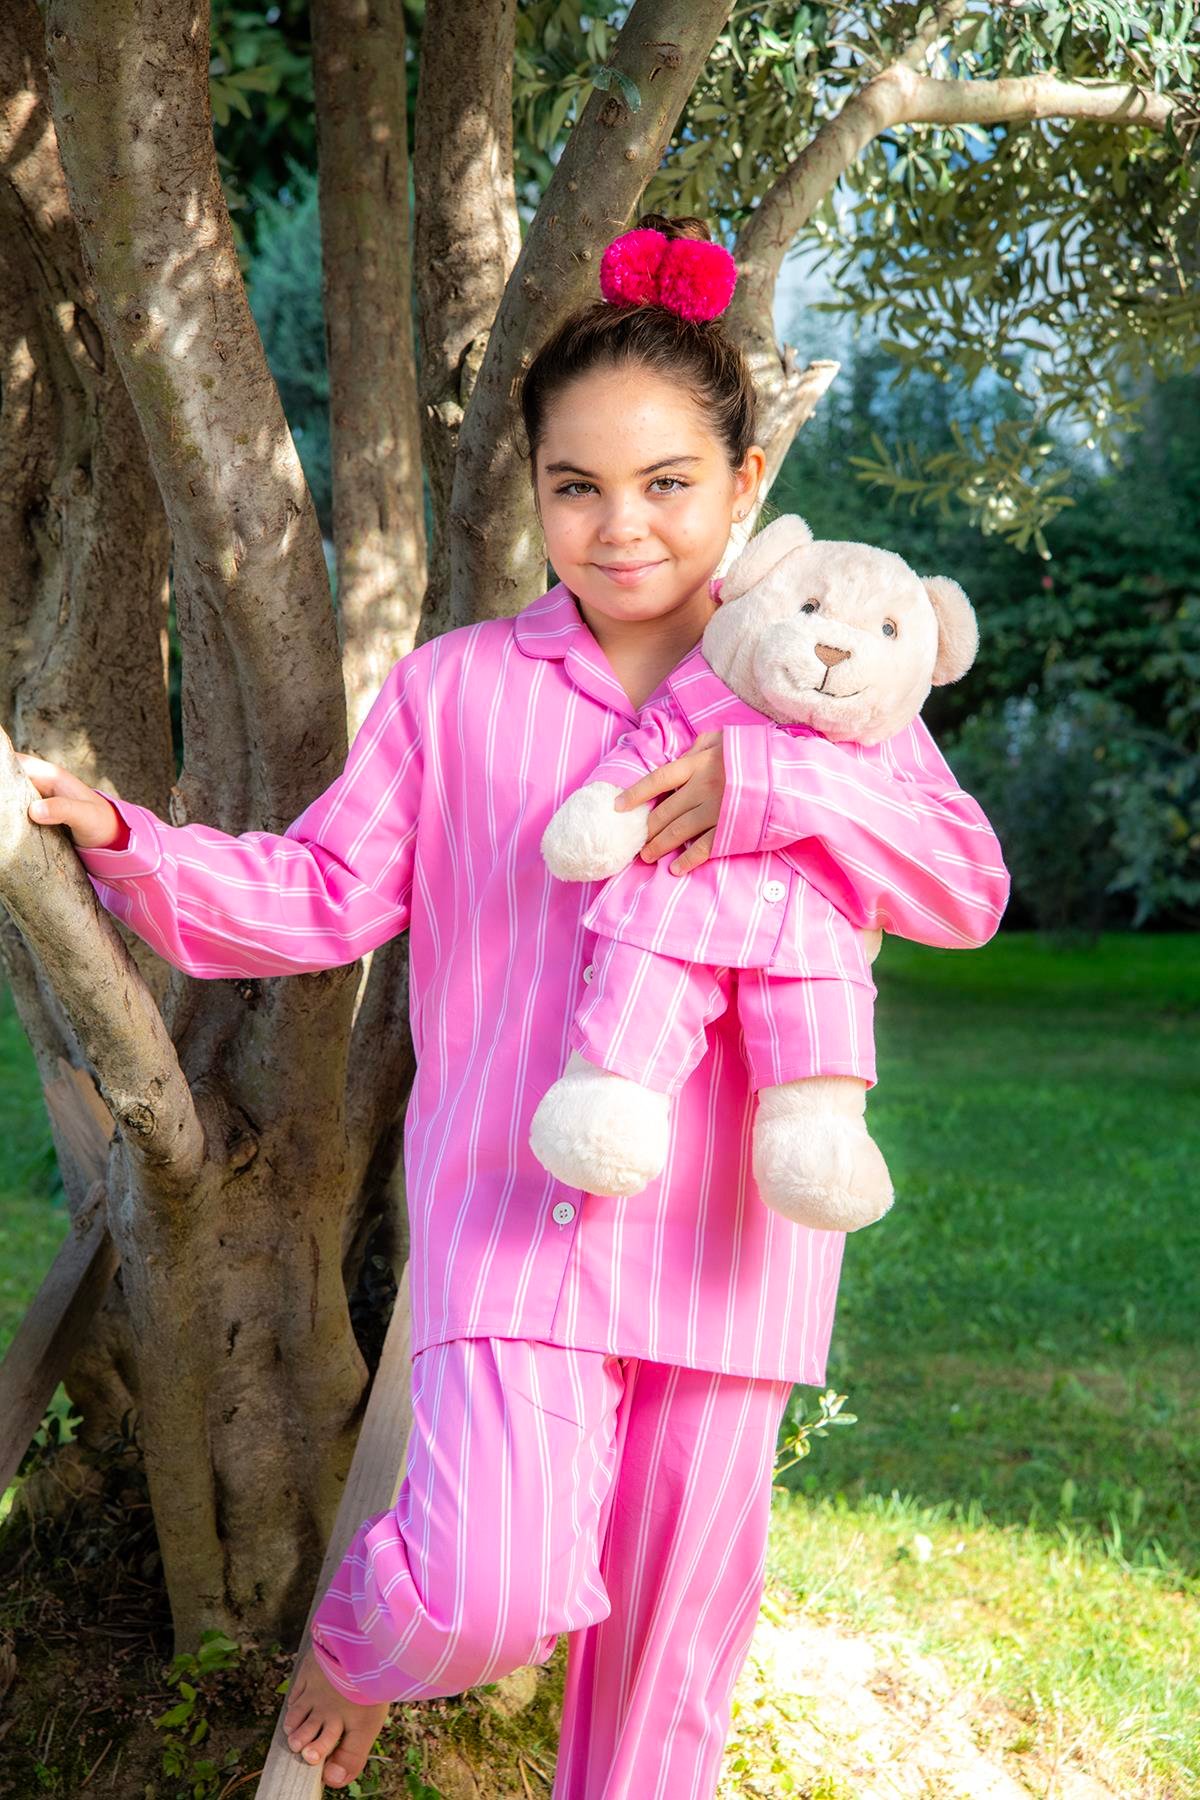 Alice Pyjama Set with Matching Teddy Bear